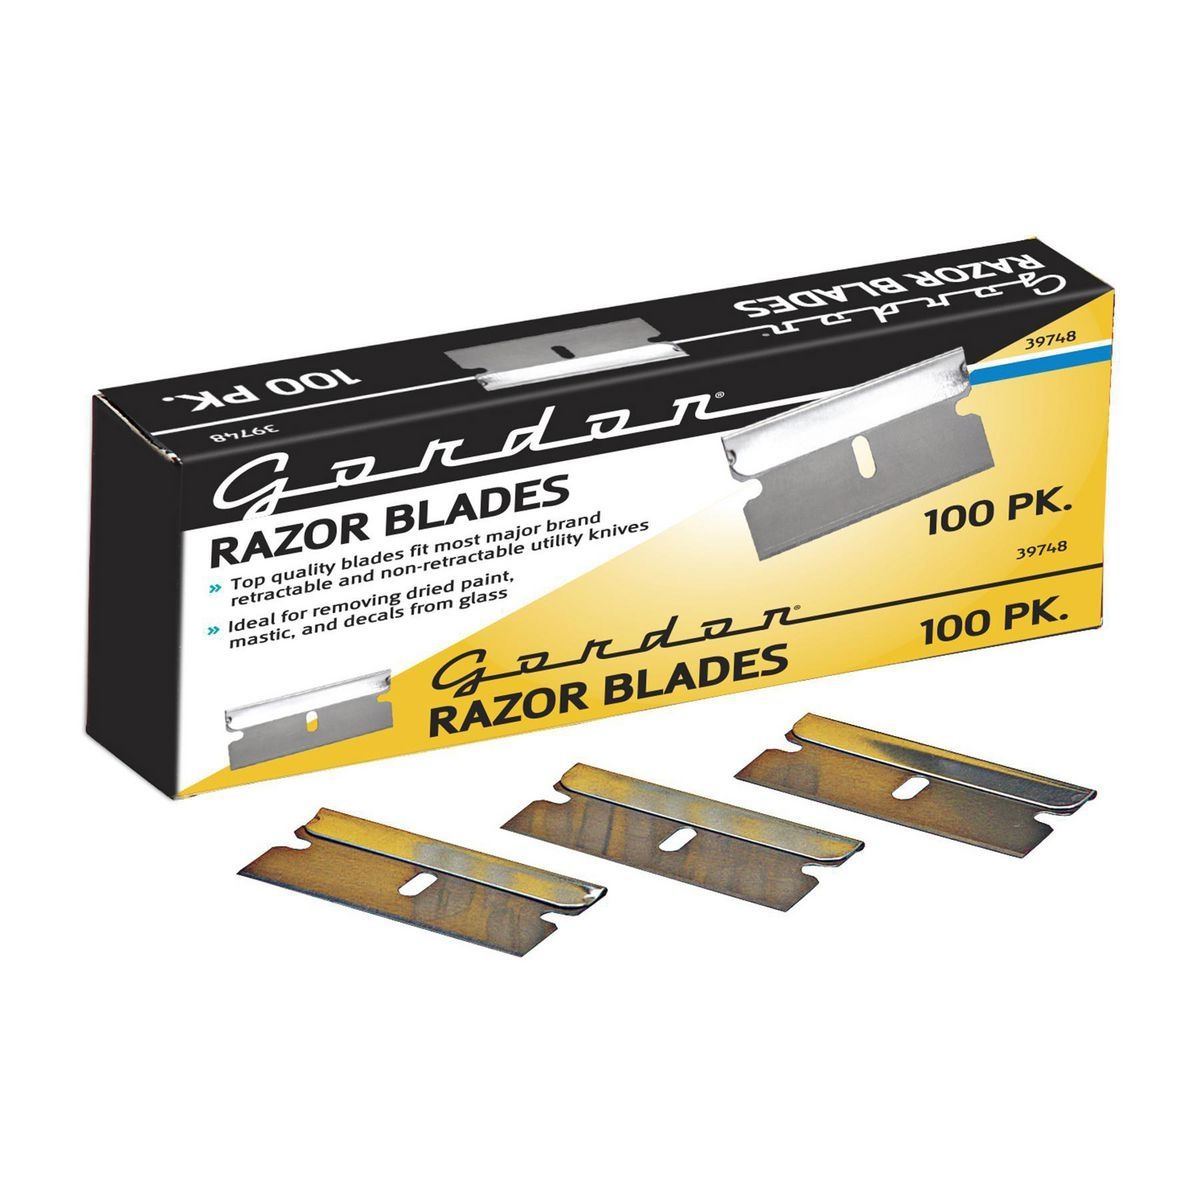 GORDON 100 Pack Industrial Quality Single Edge Utility Blades